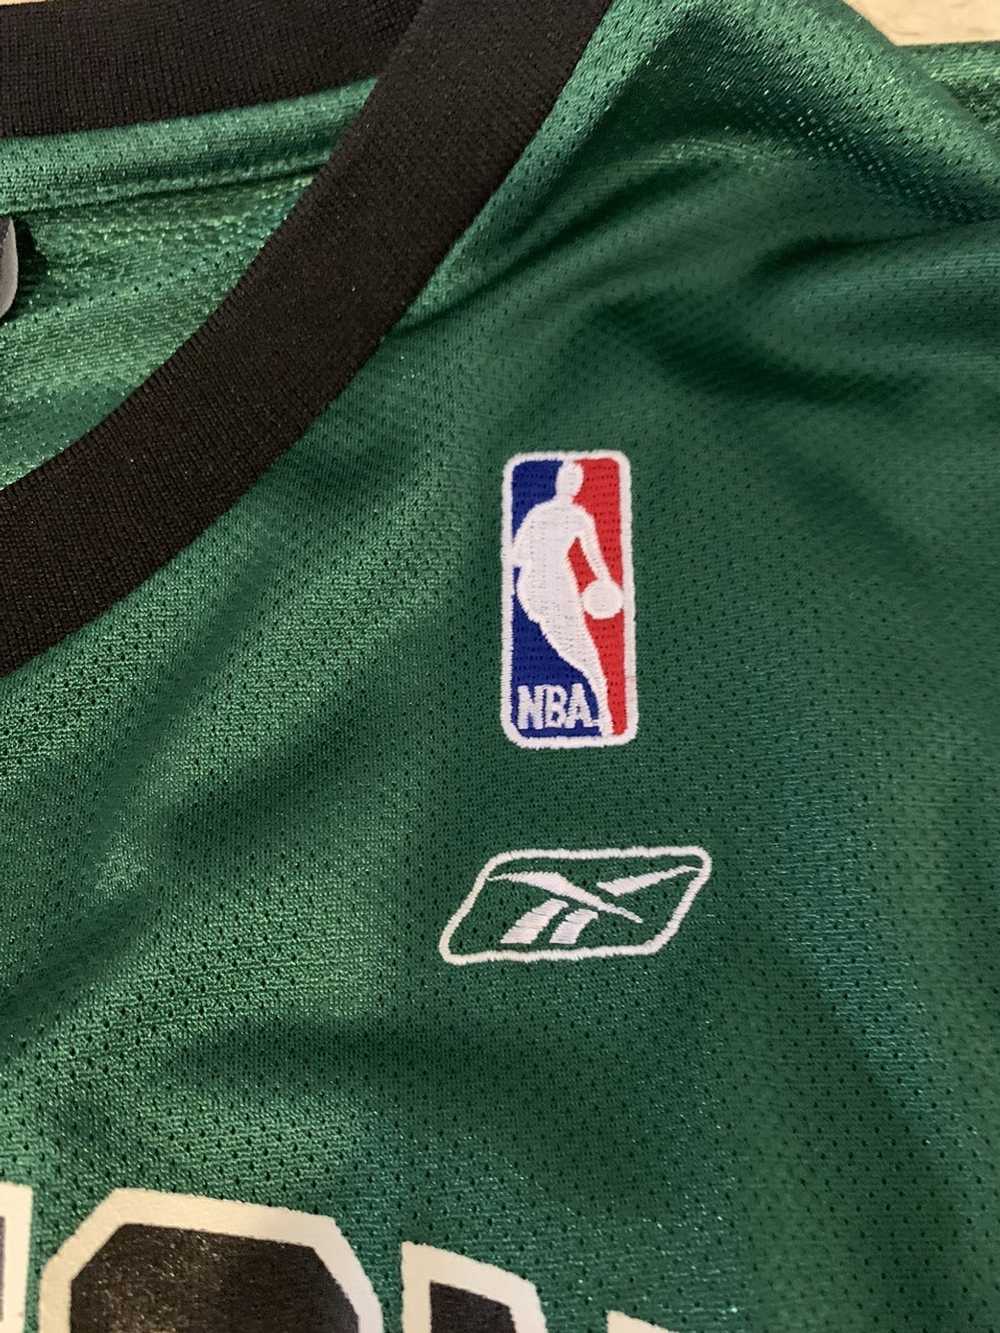 Boston Celtics Adidas Reversible Practice Jersey-NBA HARDWOOD